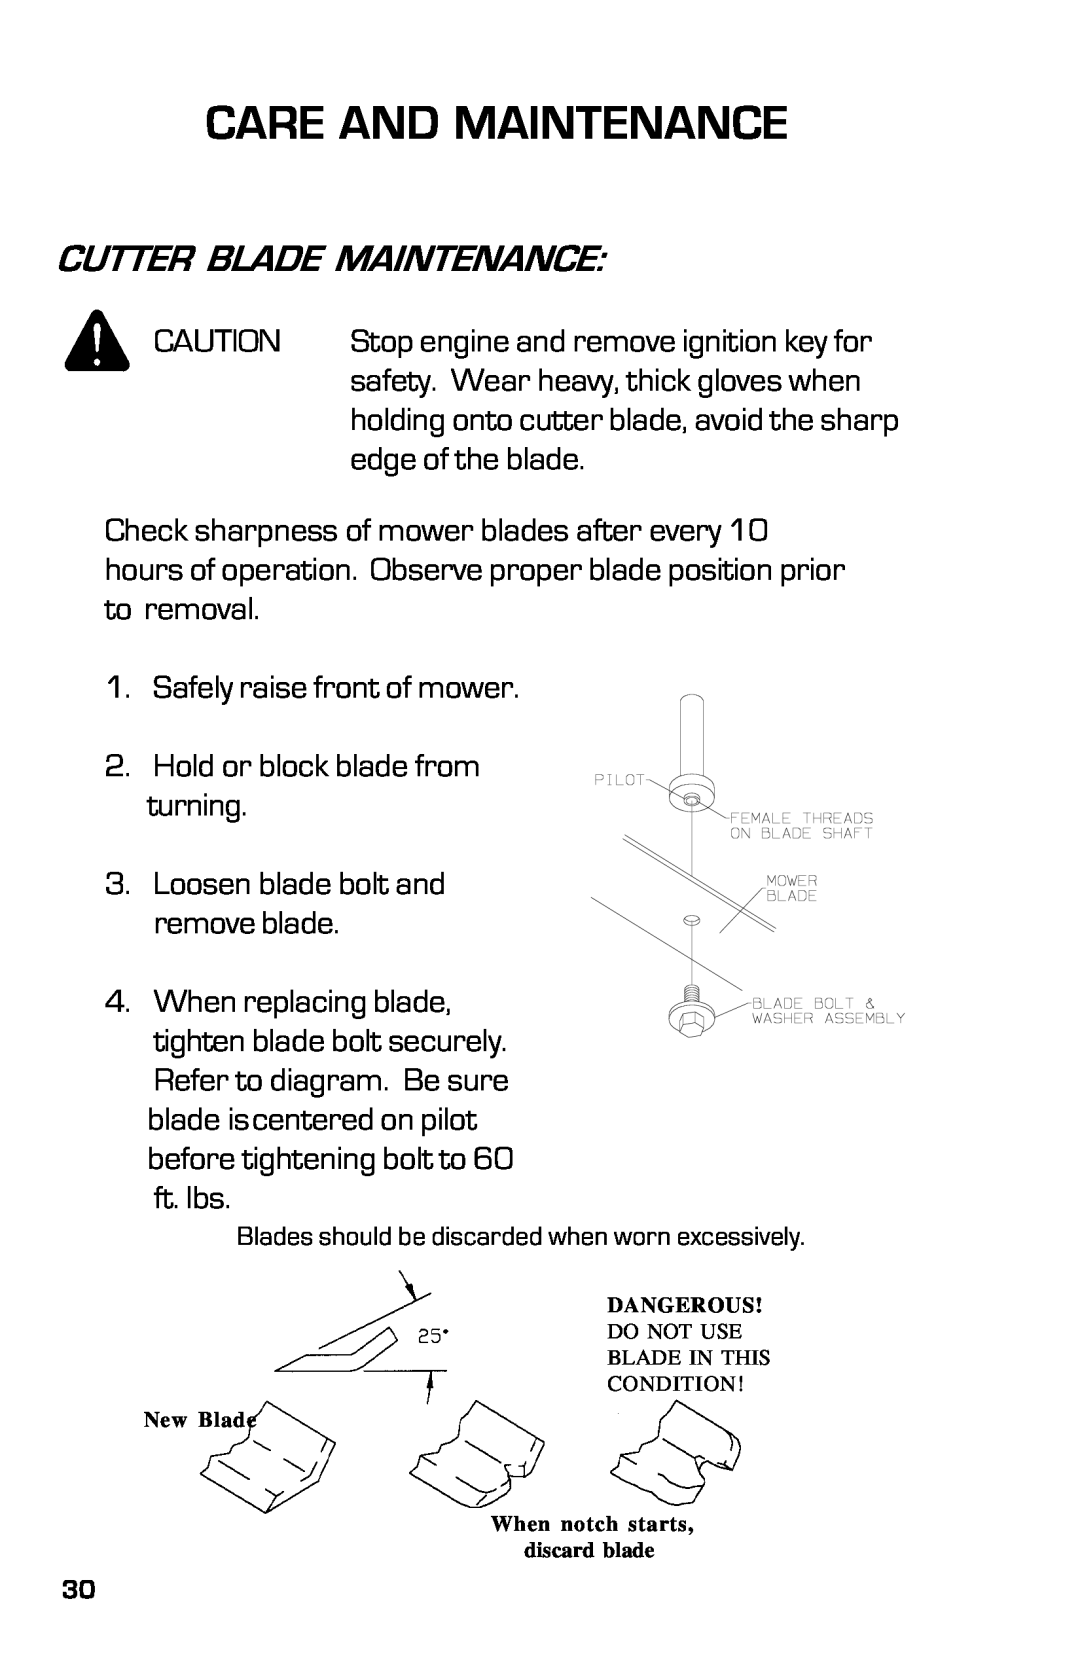 Dixon 2004 manual Cutter Blade Maintenance, Care And Maintenance 